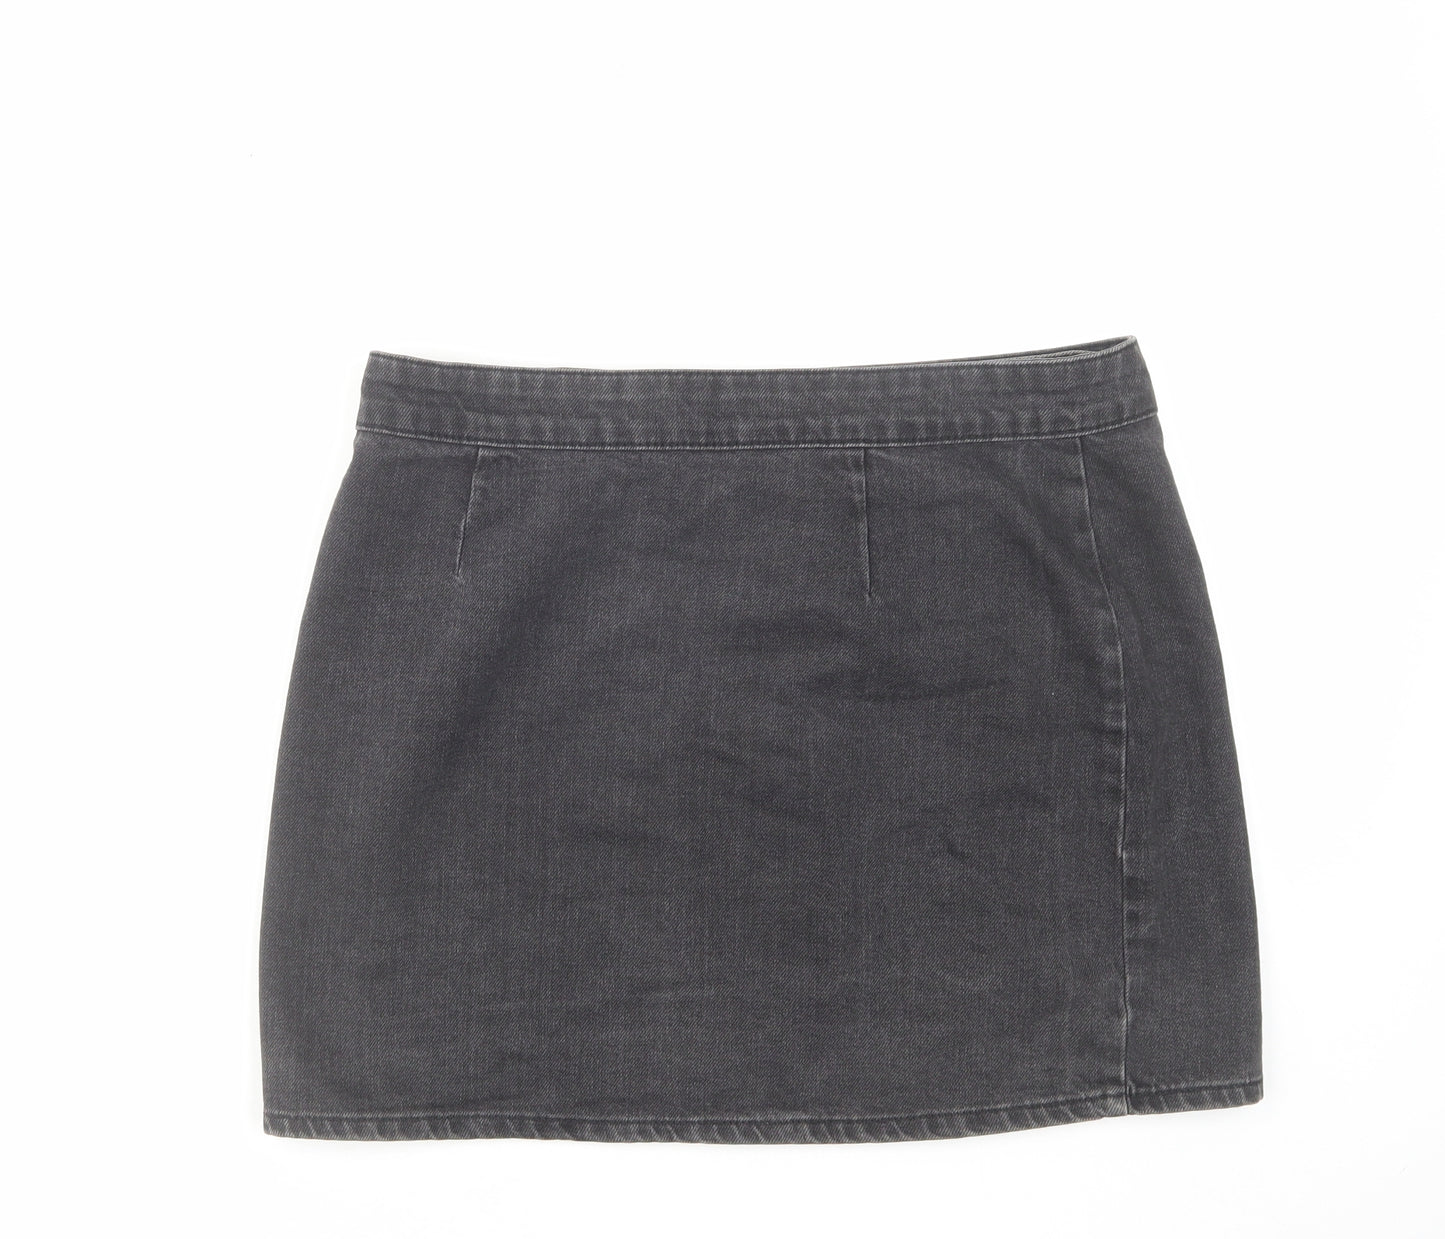 ASOS Womens Grey Cotton Wrap Skirt Size 12 Button